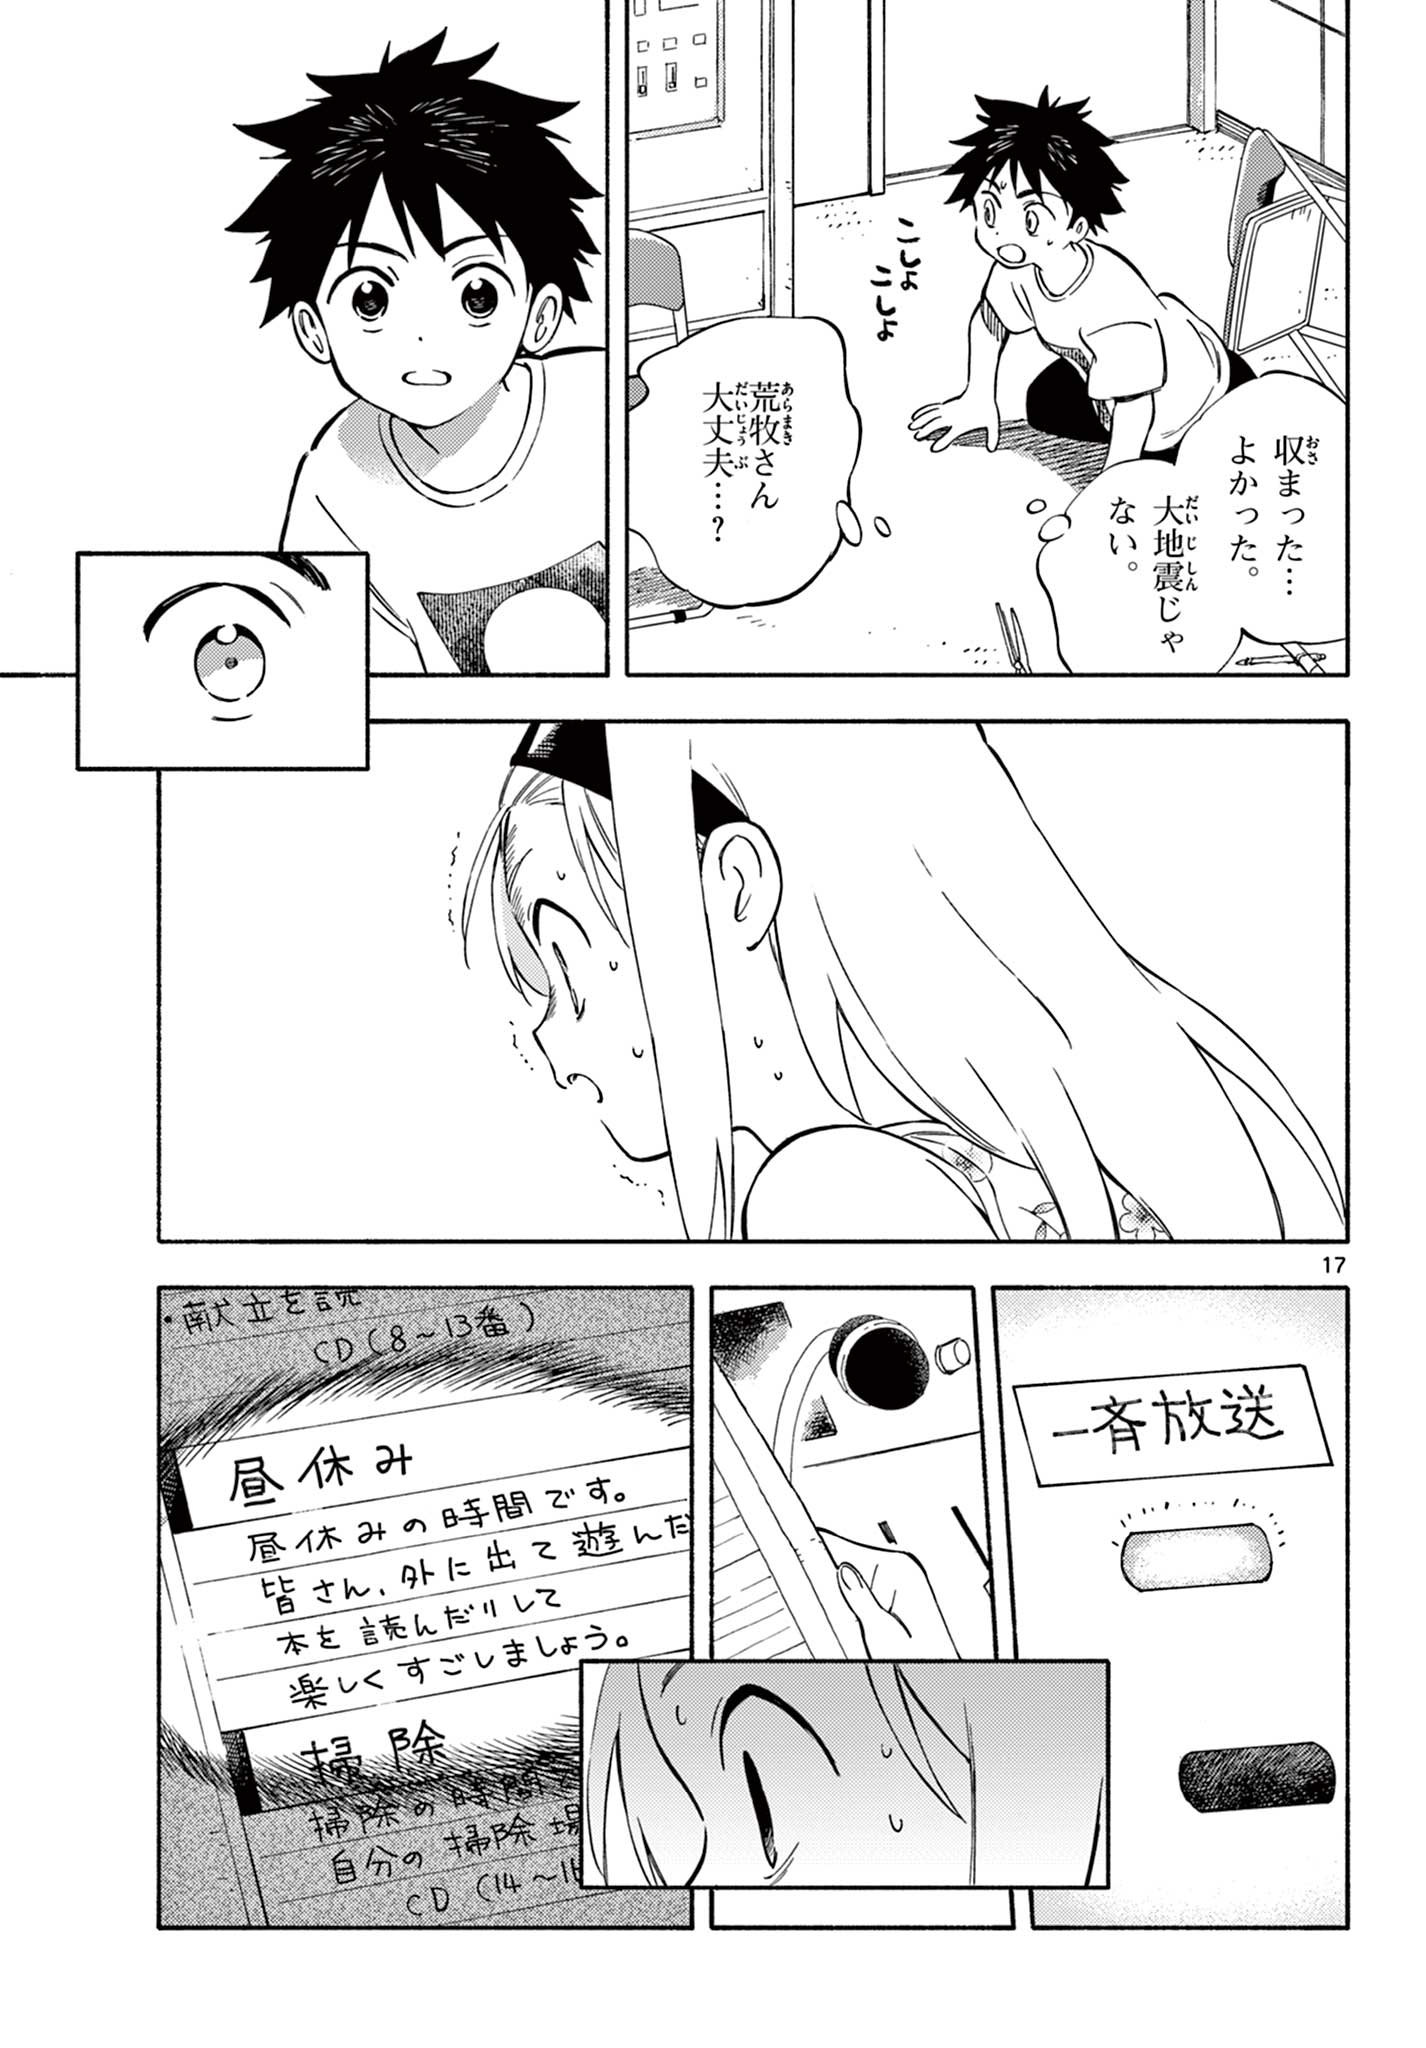 Nami no Shijima no Horizont - Chapter 8.2 - Page 3